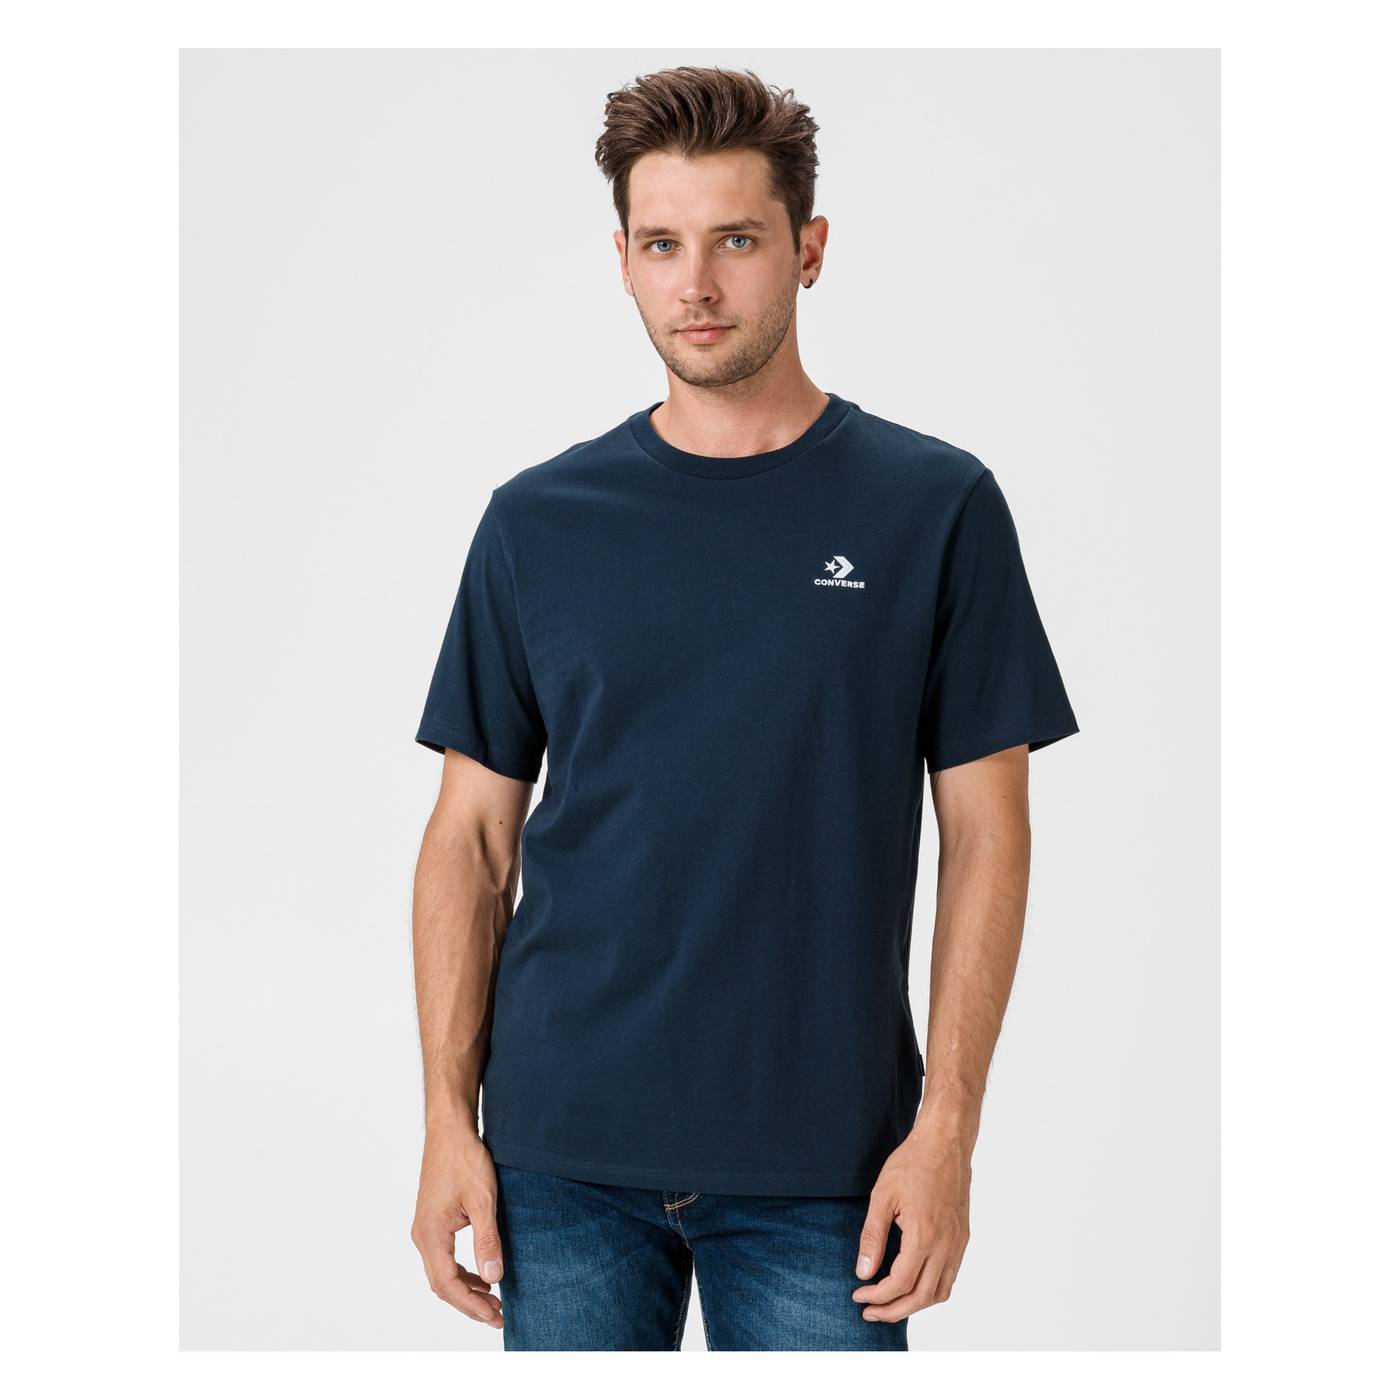 Embroidered Star Chevron Converse T-Shirt - Men